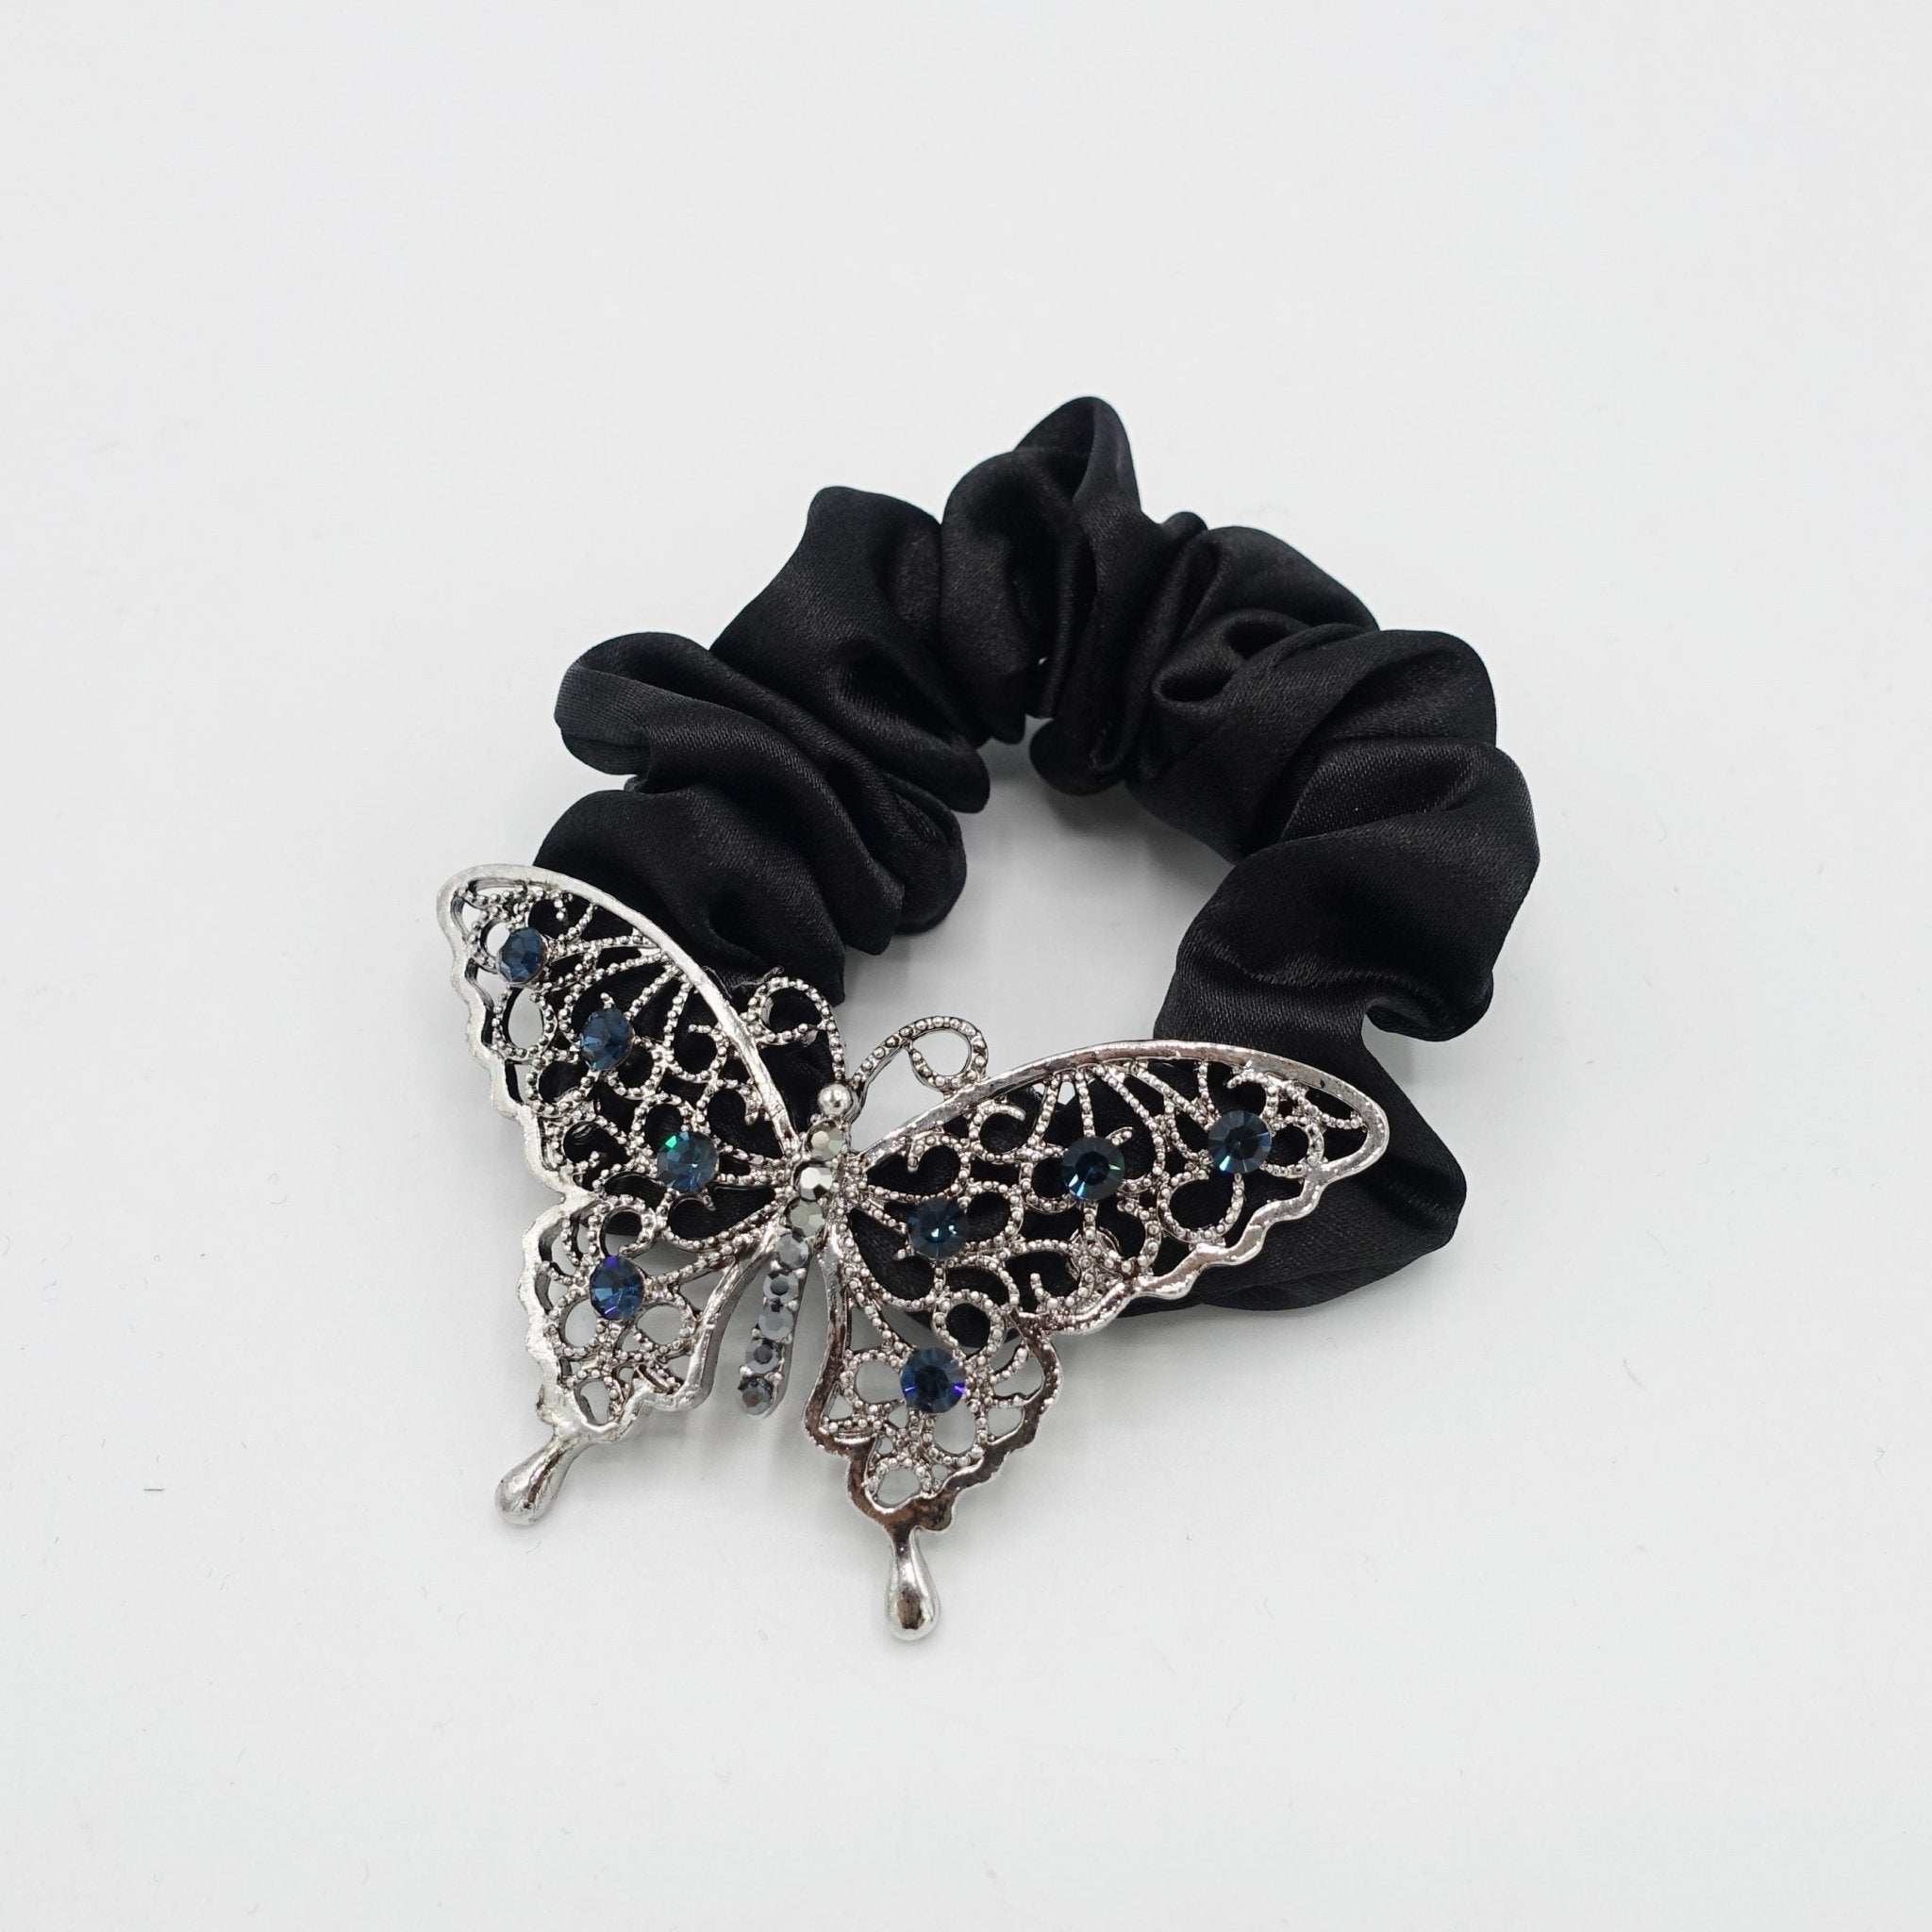 VeryShine rhinestone embellished butterfly satin scrunchies hair elastic for women